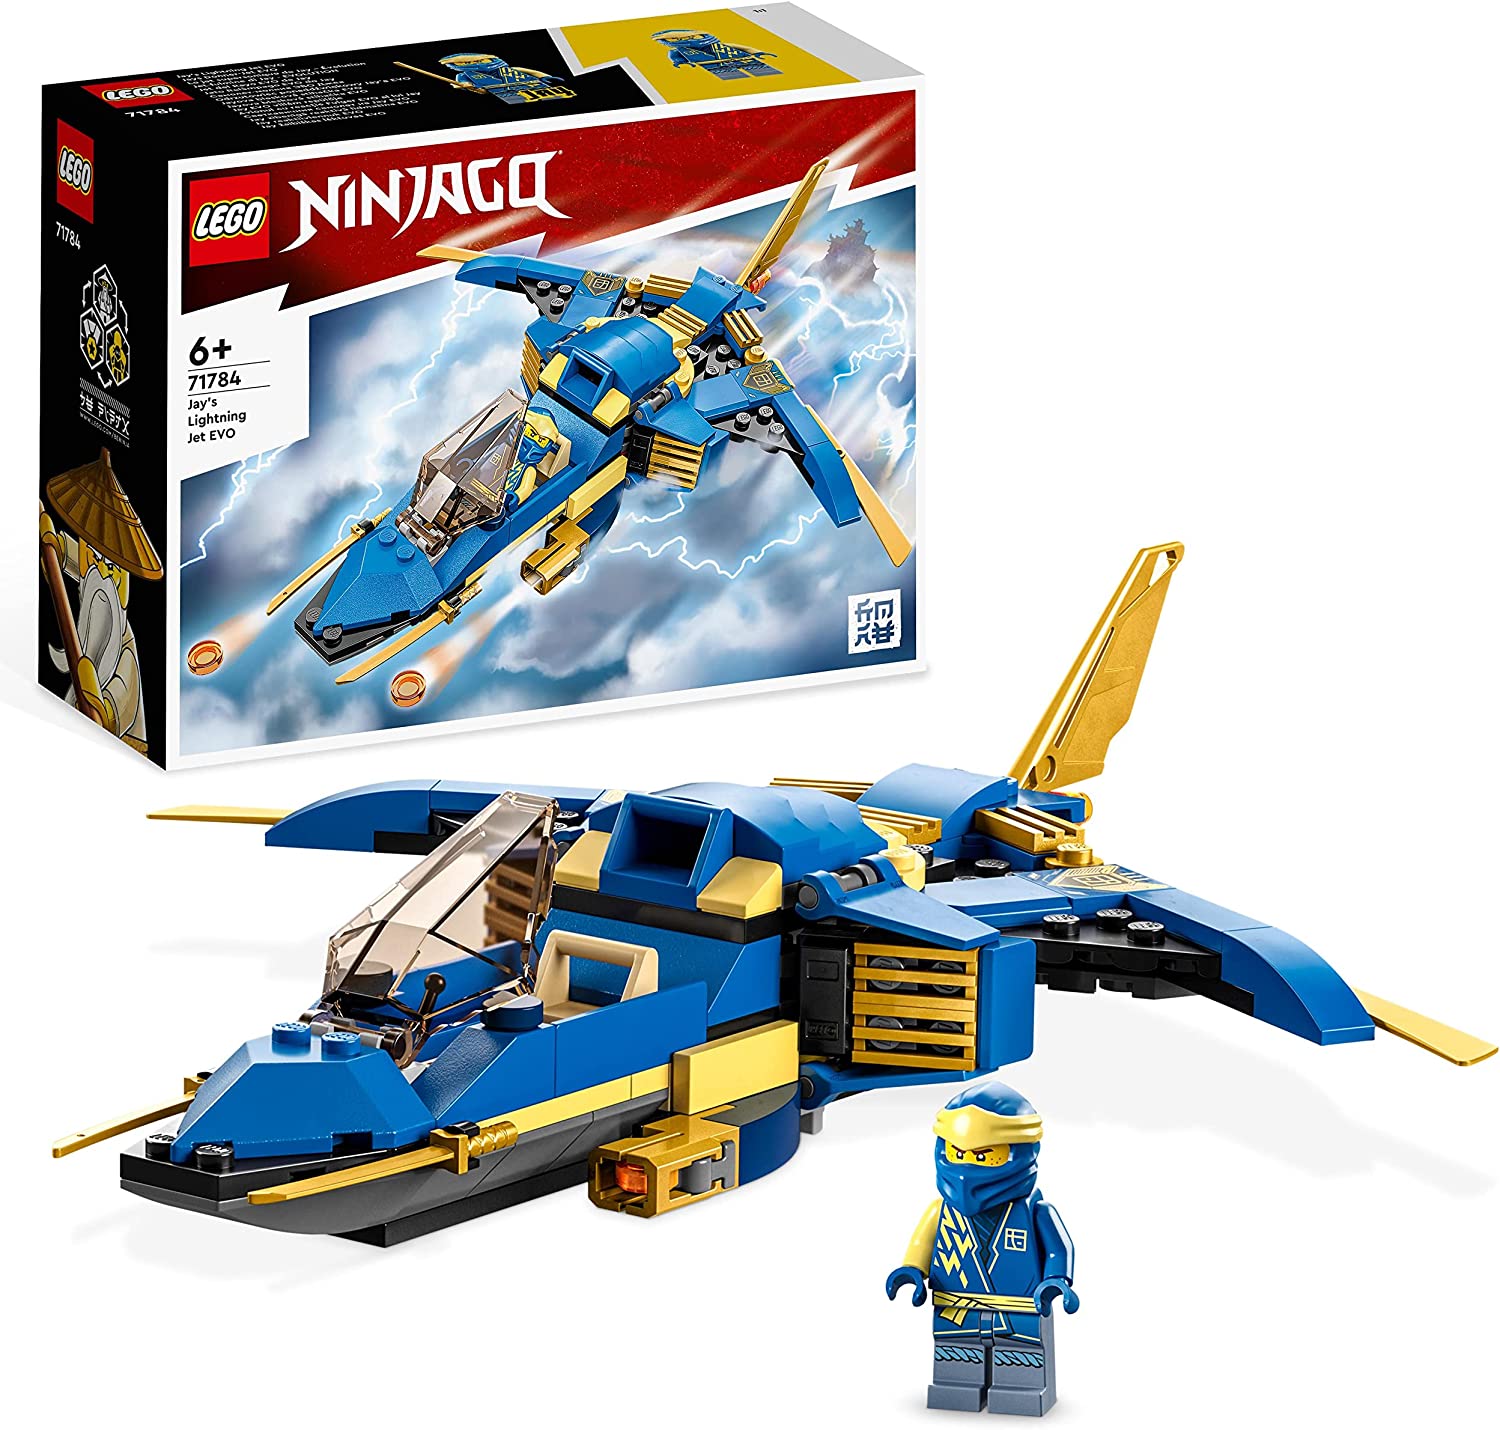 LEGO 71784 NINJAGO Jays Thunder Jet EVO, Upgradable Ninja Toy Plane with Jay Mini Figure, Birthday Gift Idea for Children from 7 Years